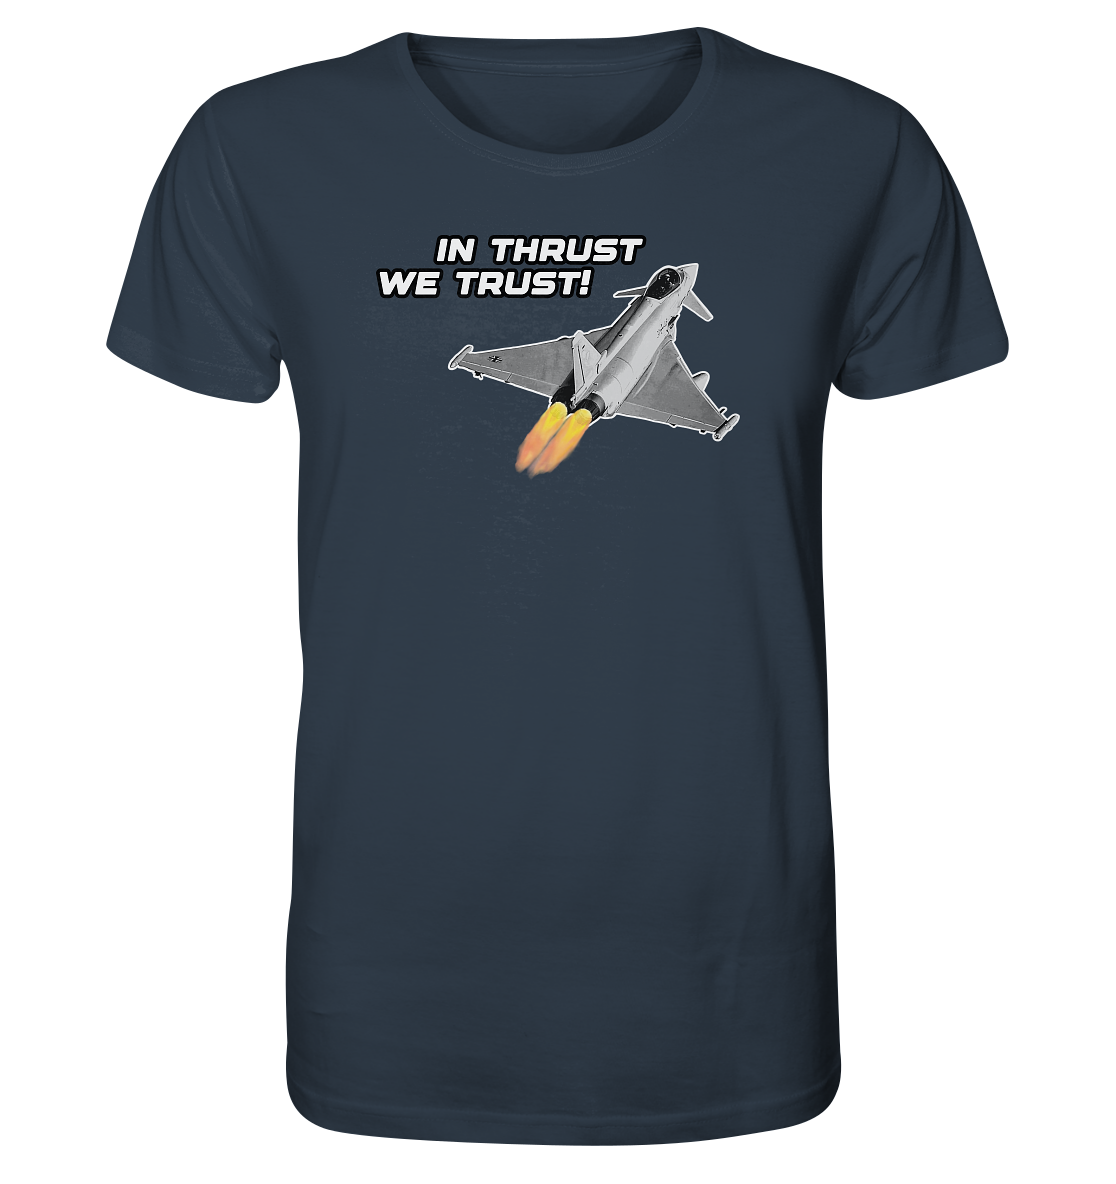 In thrust we trust - Organic Shirt